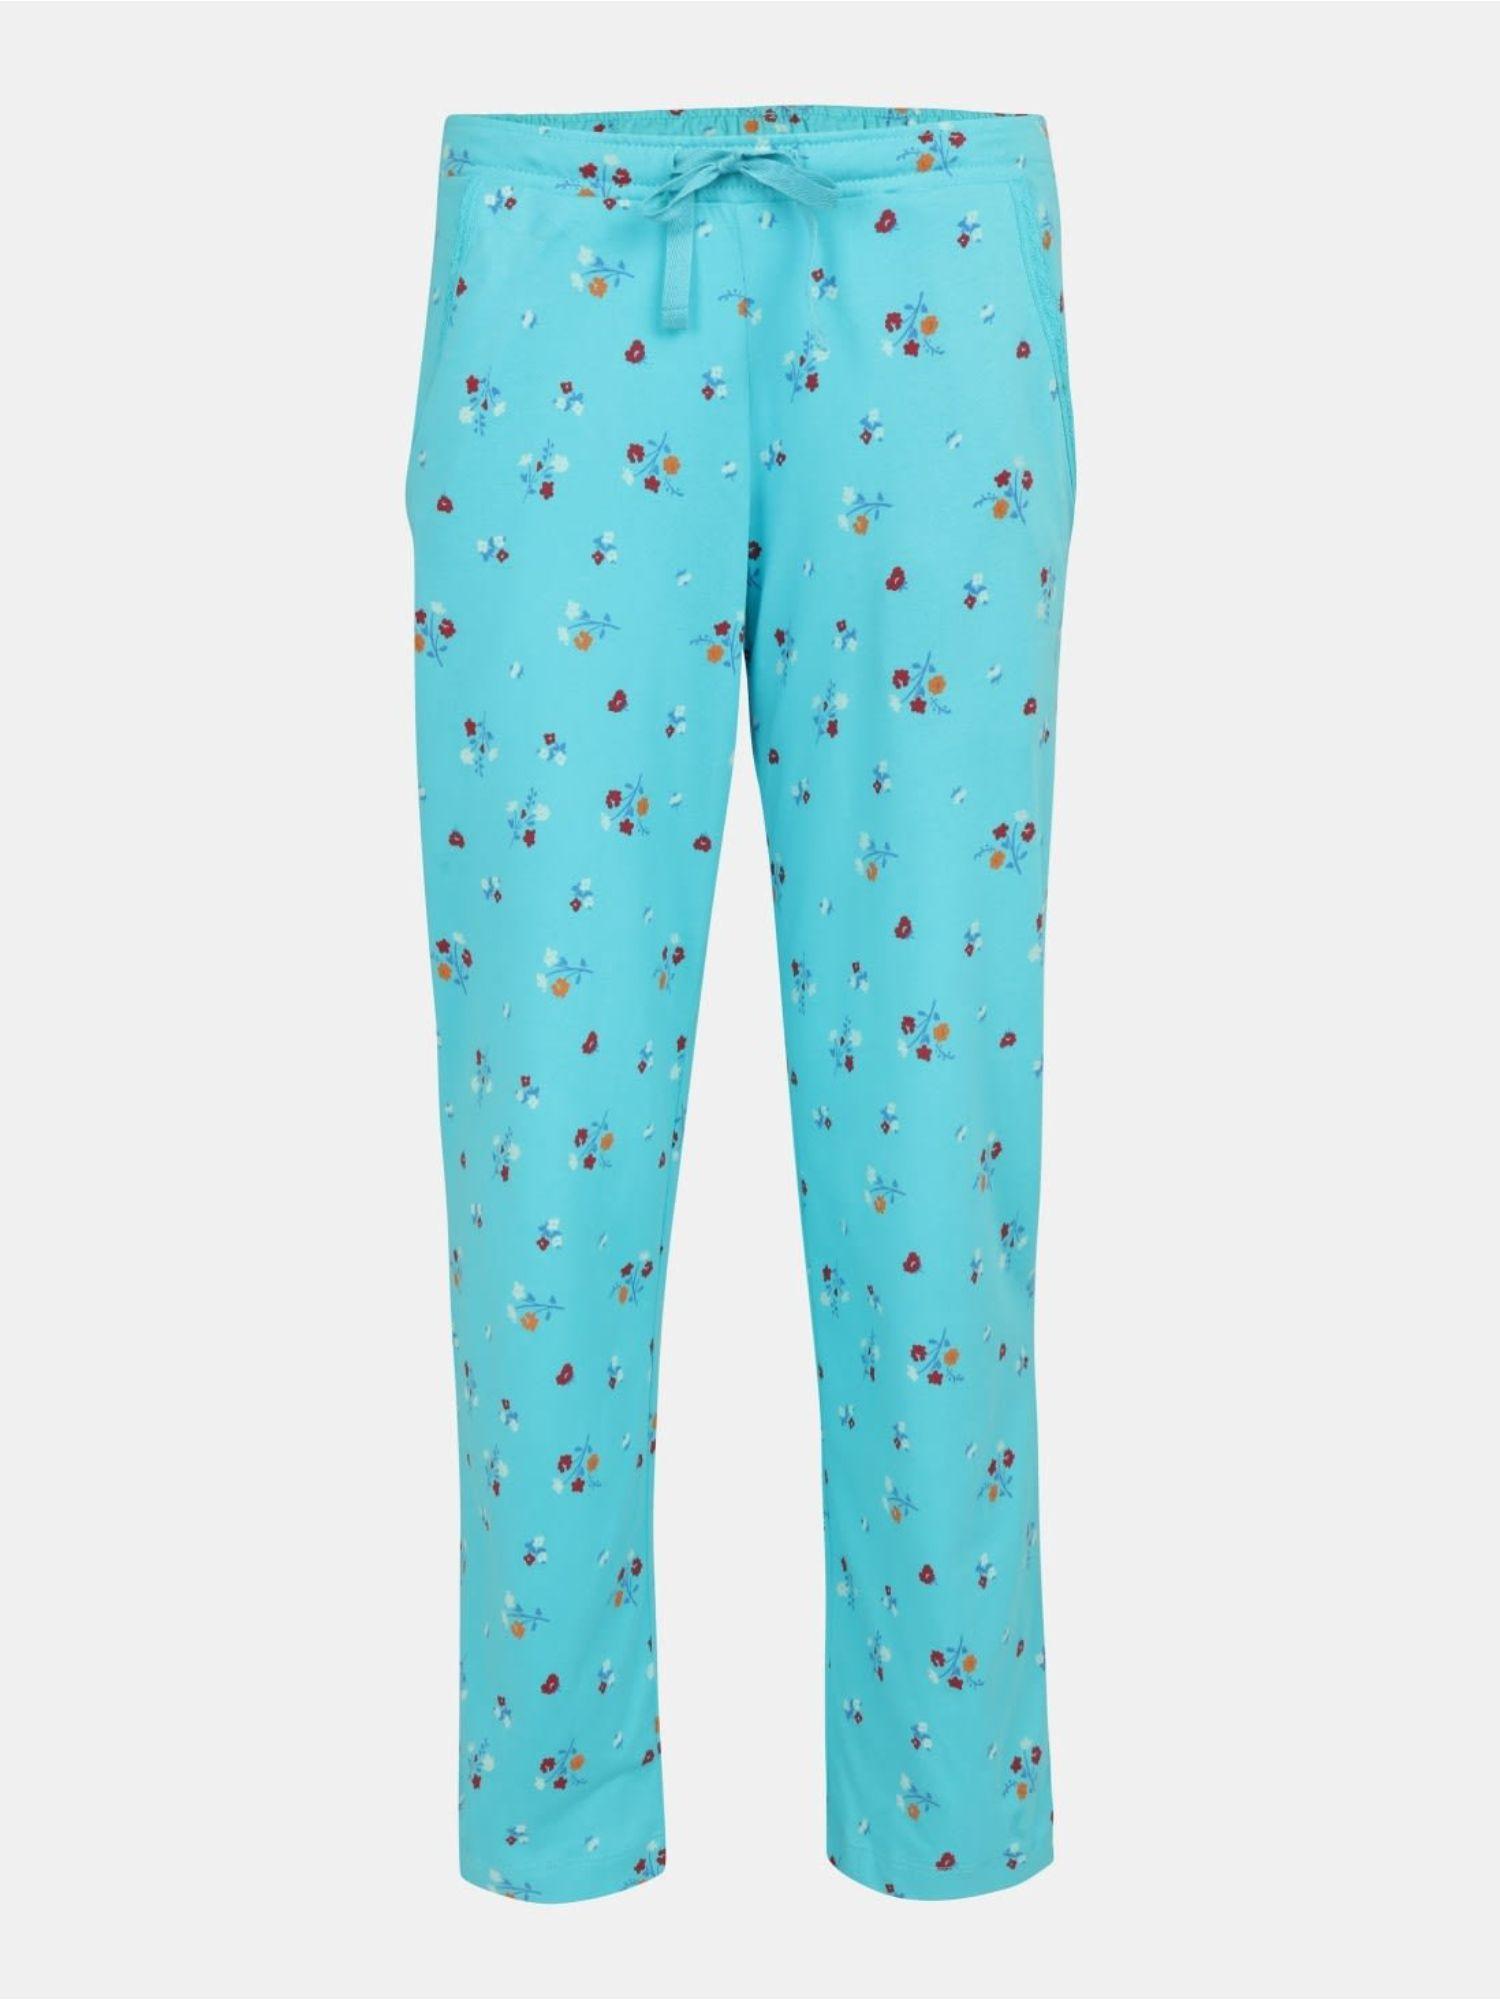 blue curacao printed pyjama - style number - (rg04)